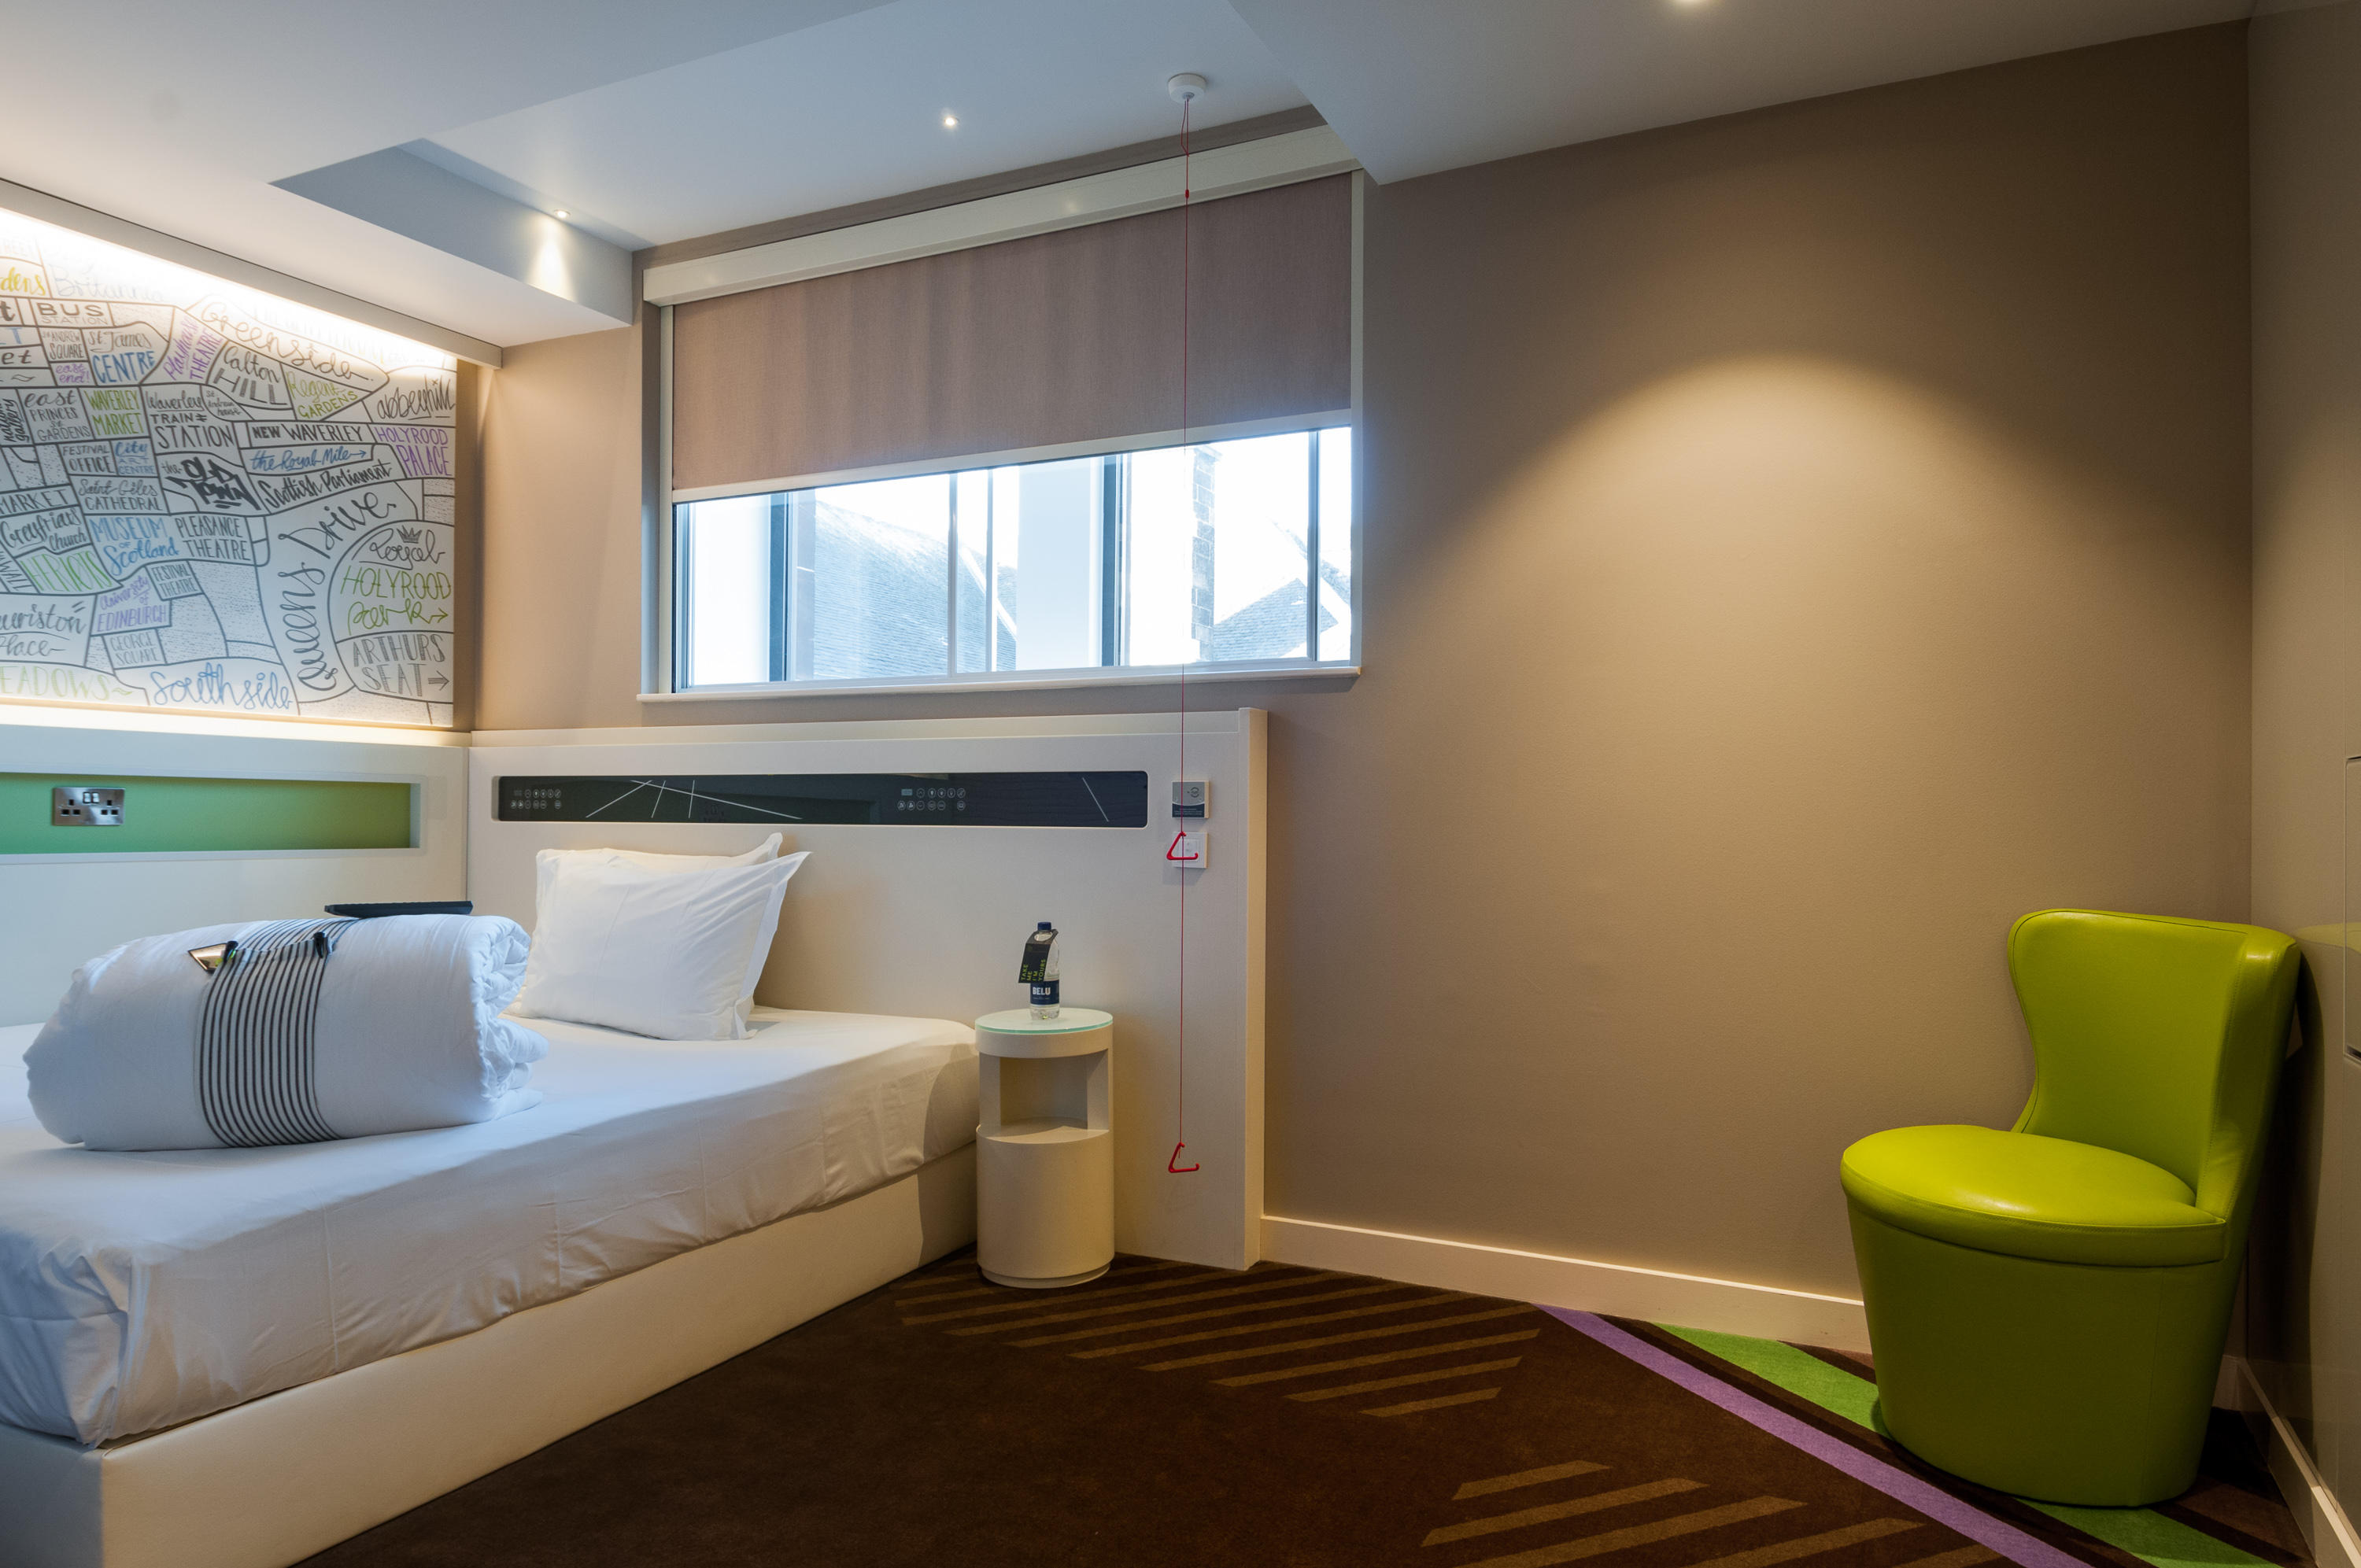 hub by Premier Inn accessible room hub by Premier Inn London Tower Bridge hotel London 08715 279576